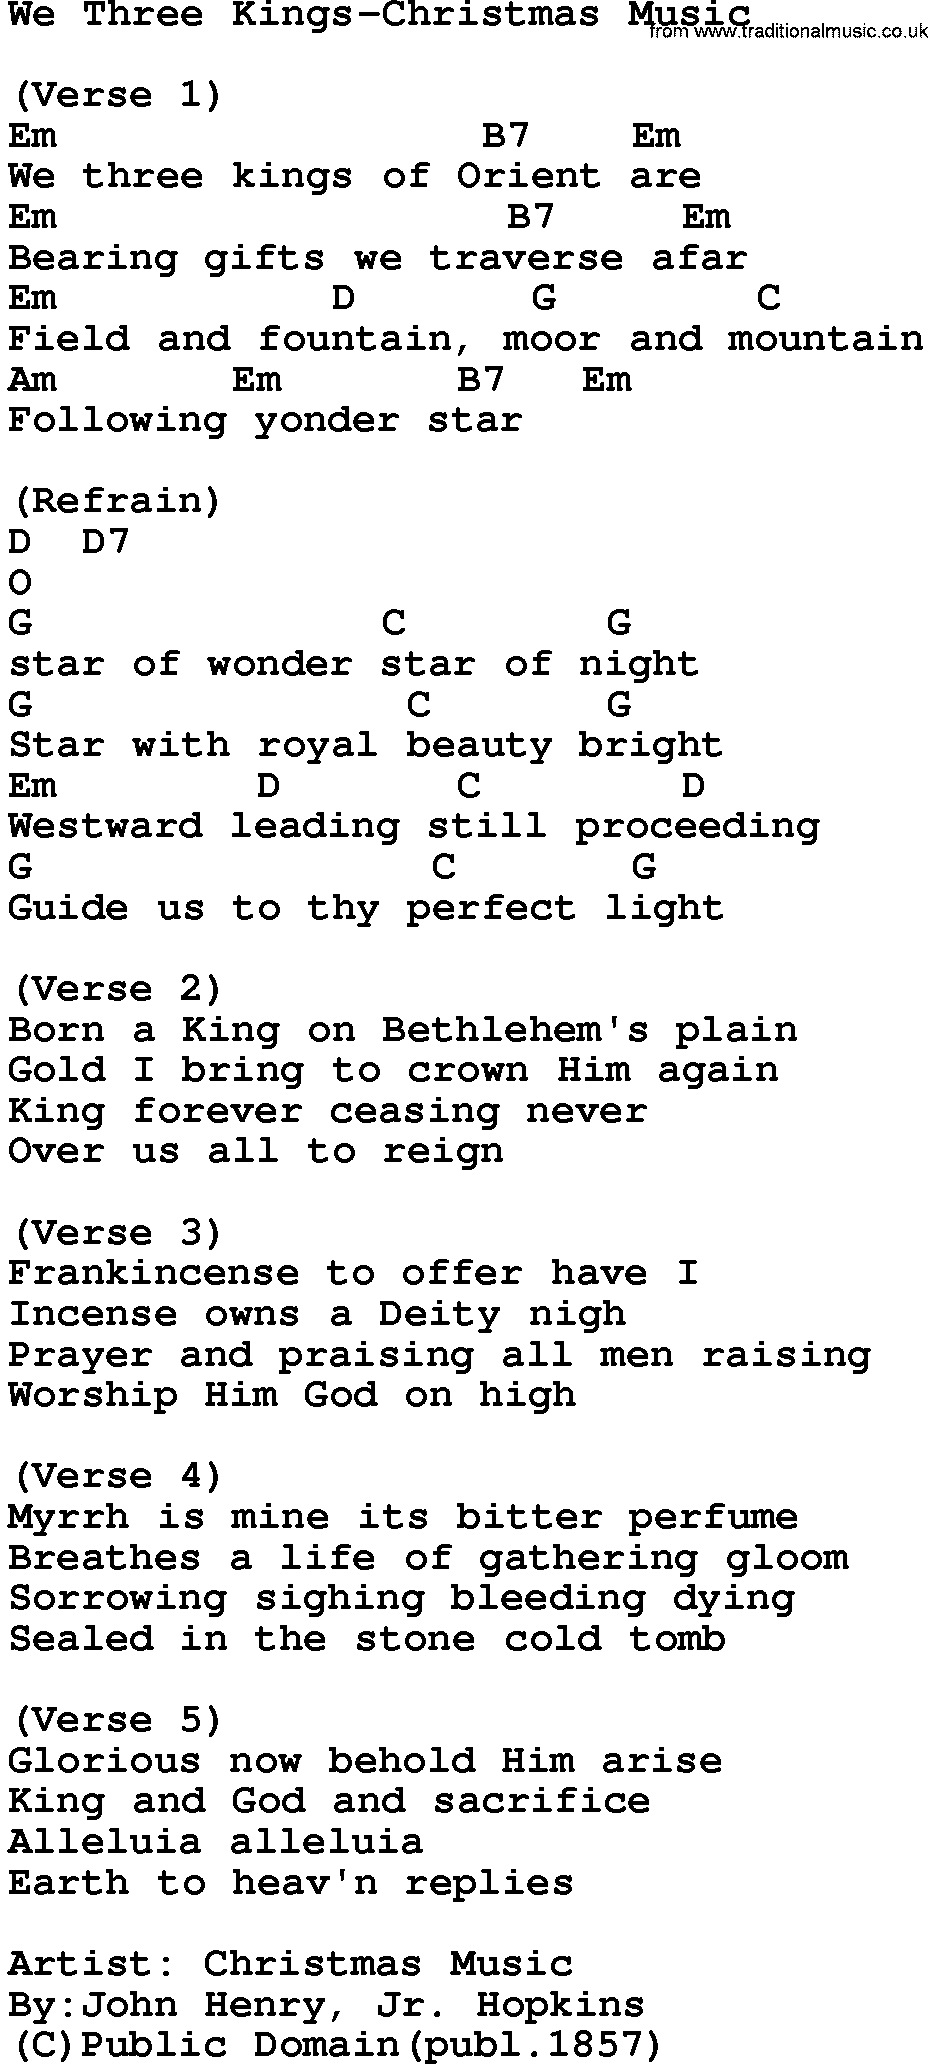 Gospel Song: We Three Kings-Christmas Music, lyrics and chords.